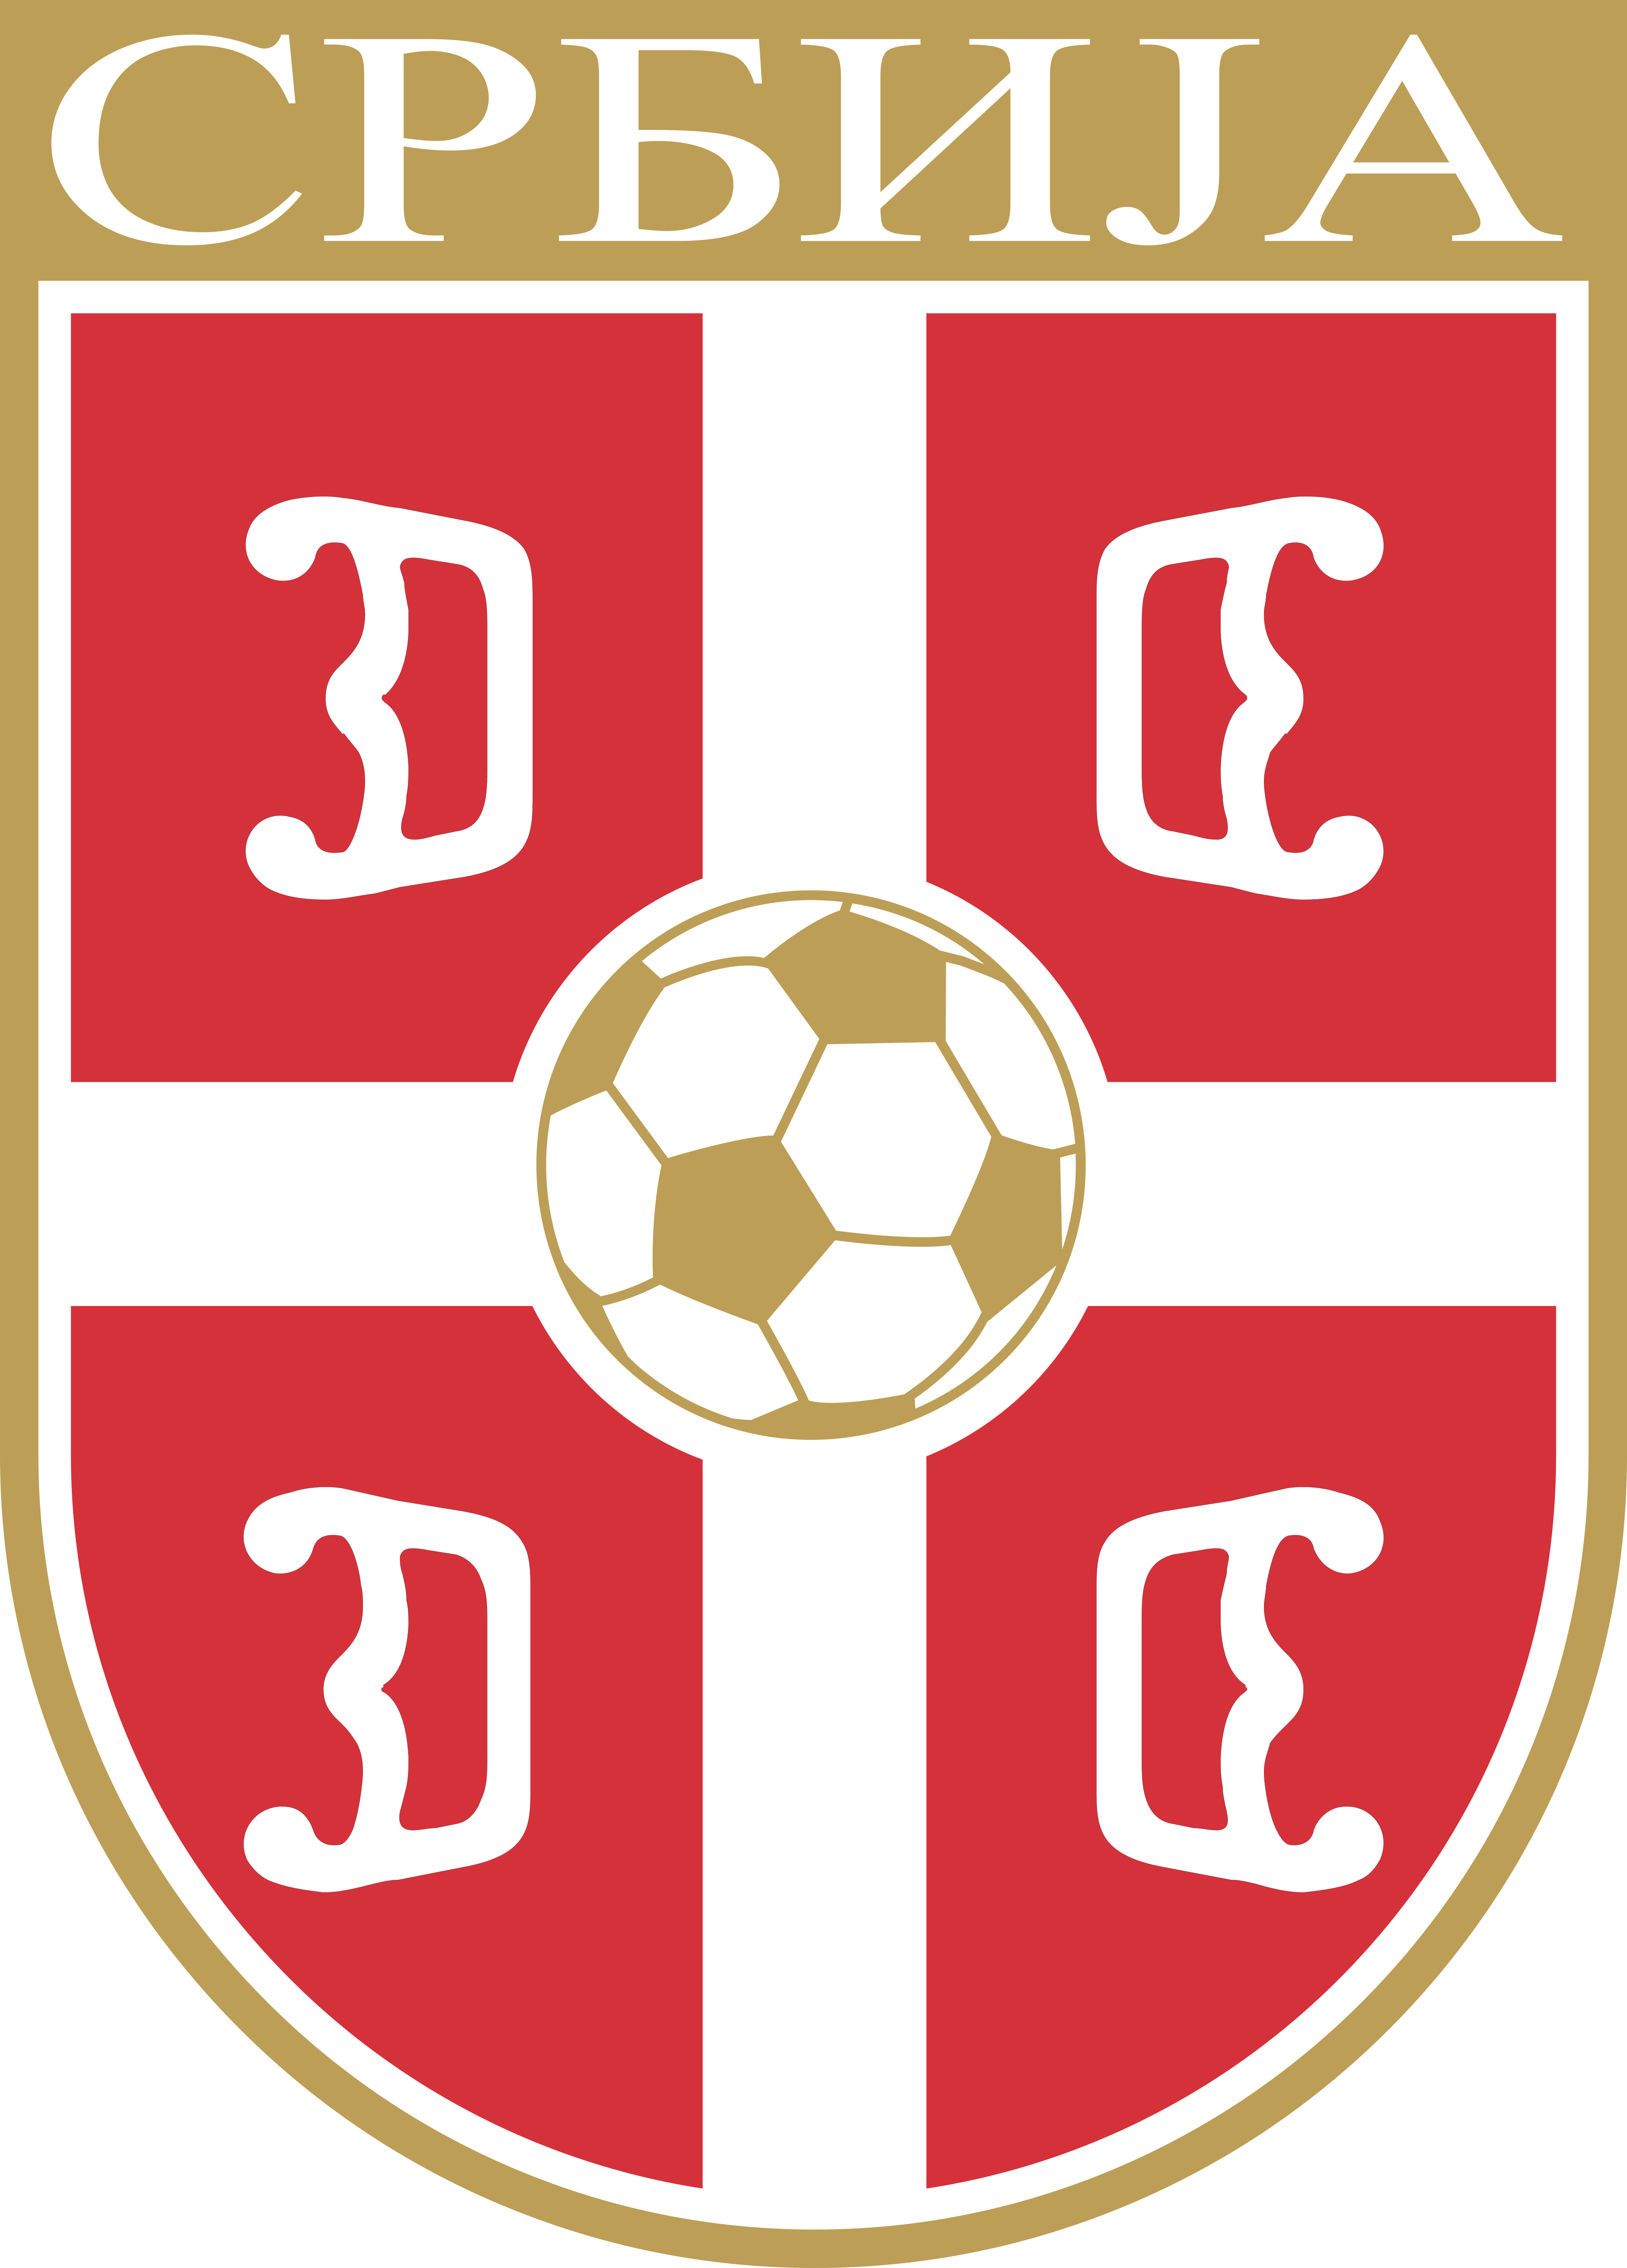 serbia national football team logo - Serbia National Football Team Logo